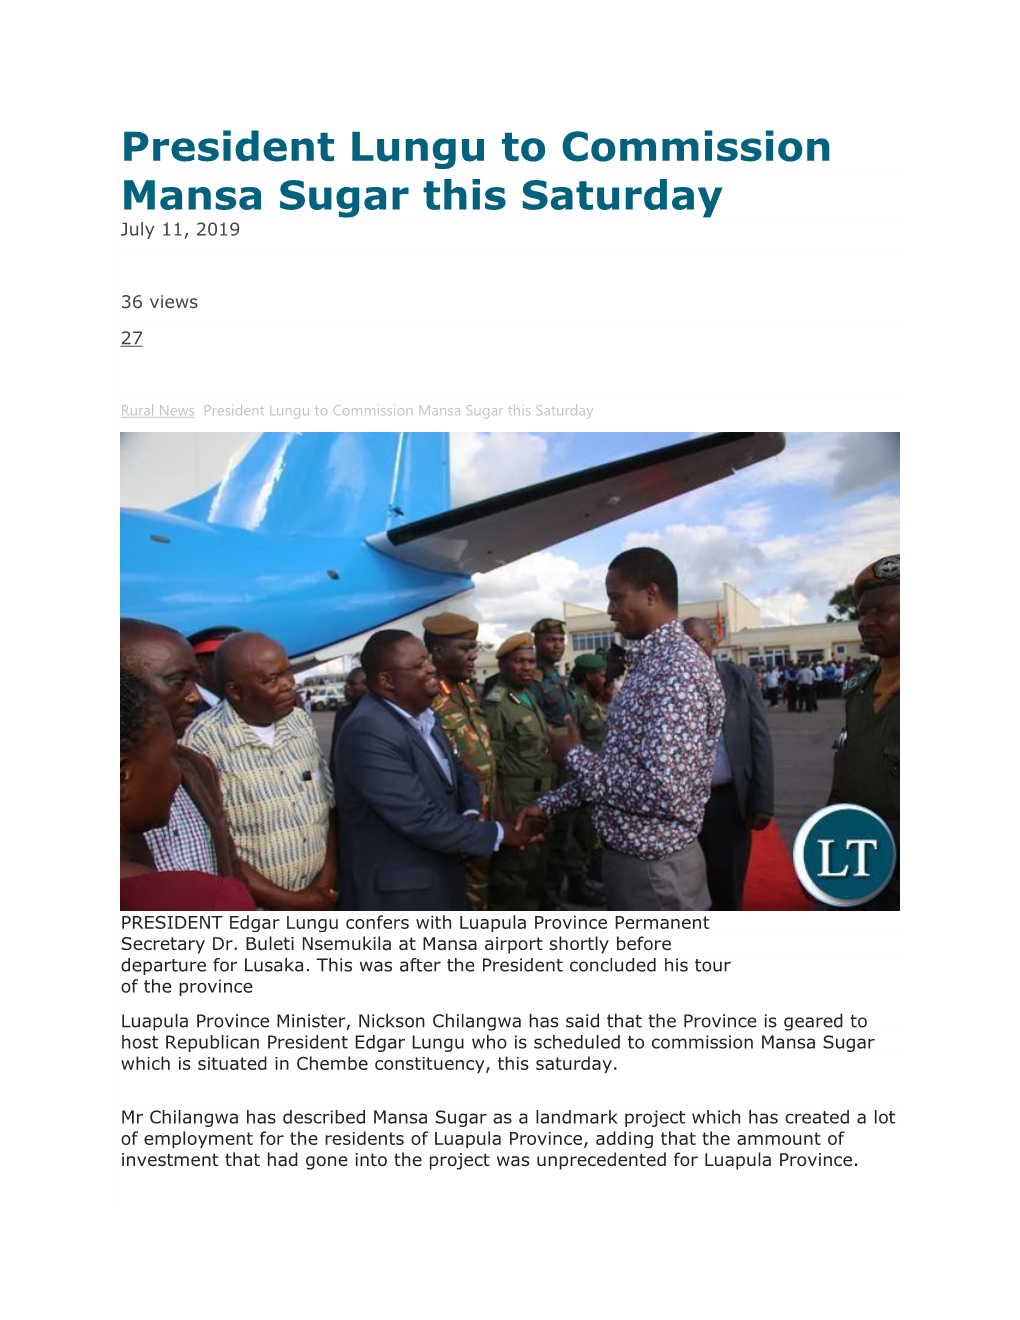 President Lungu to Commission Mansa Sugar This Saturday July 11, 2019